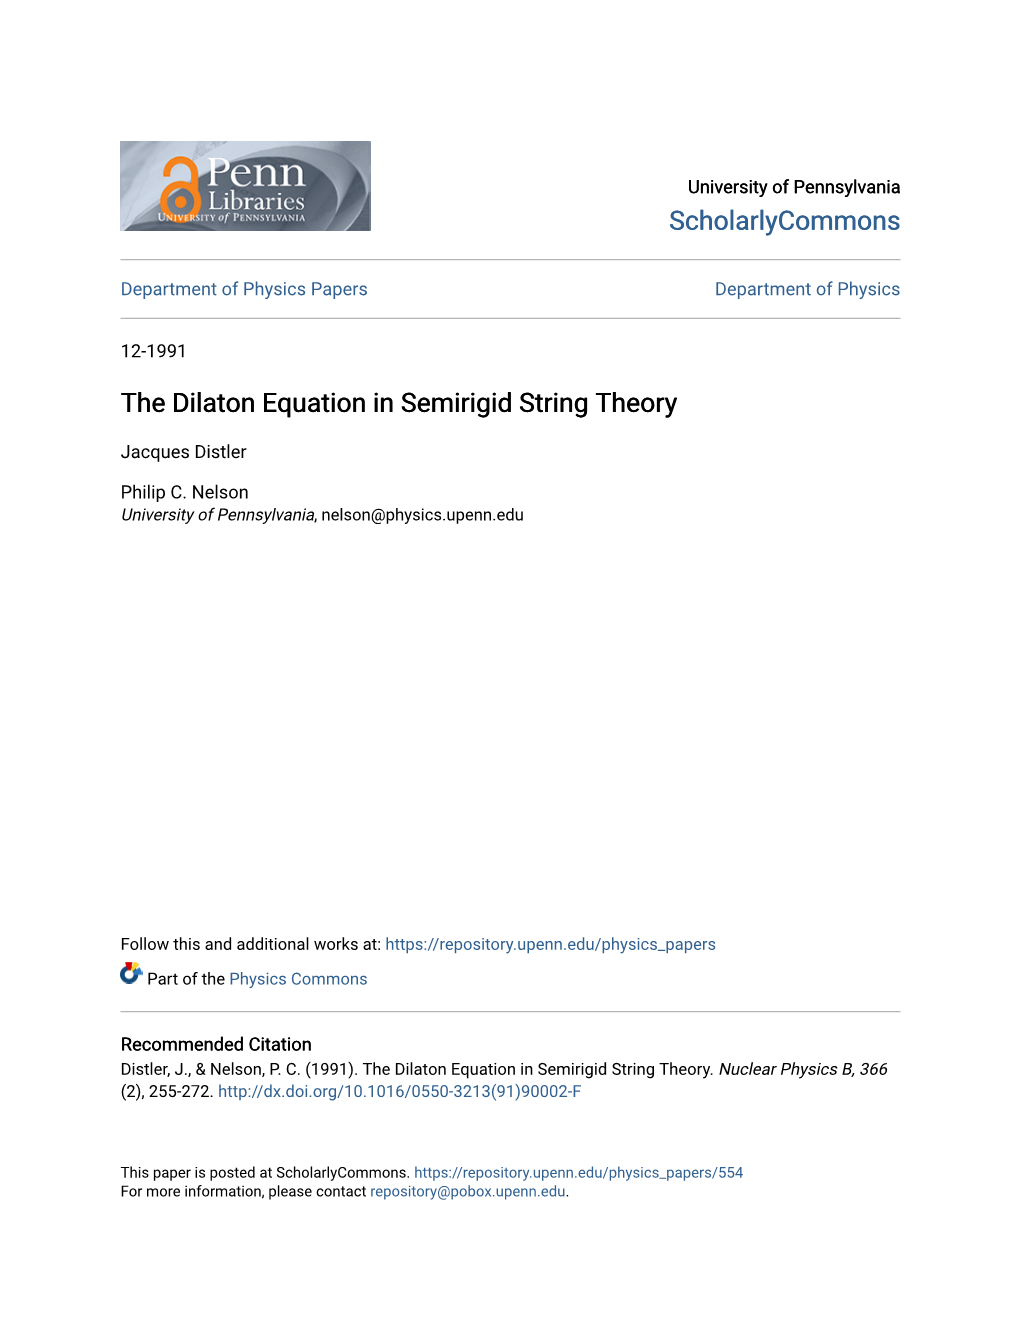 The Dilaton Equation in Semirigid String Theory